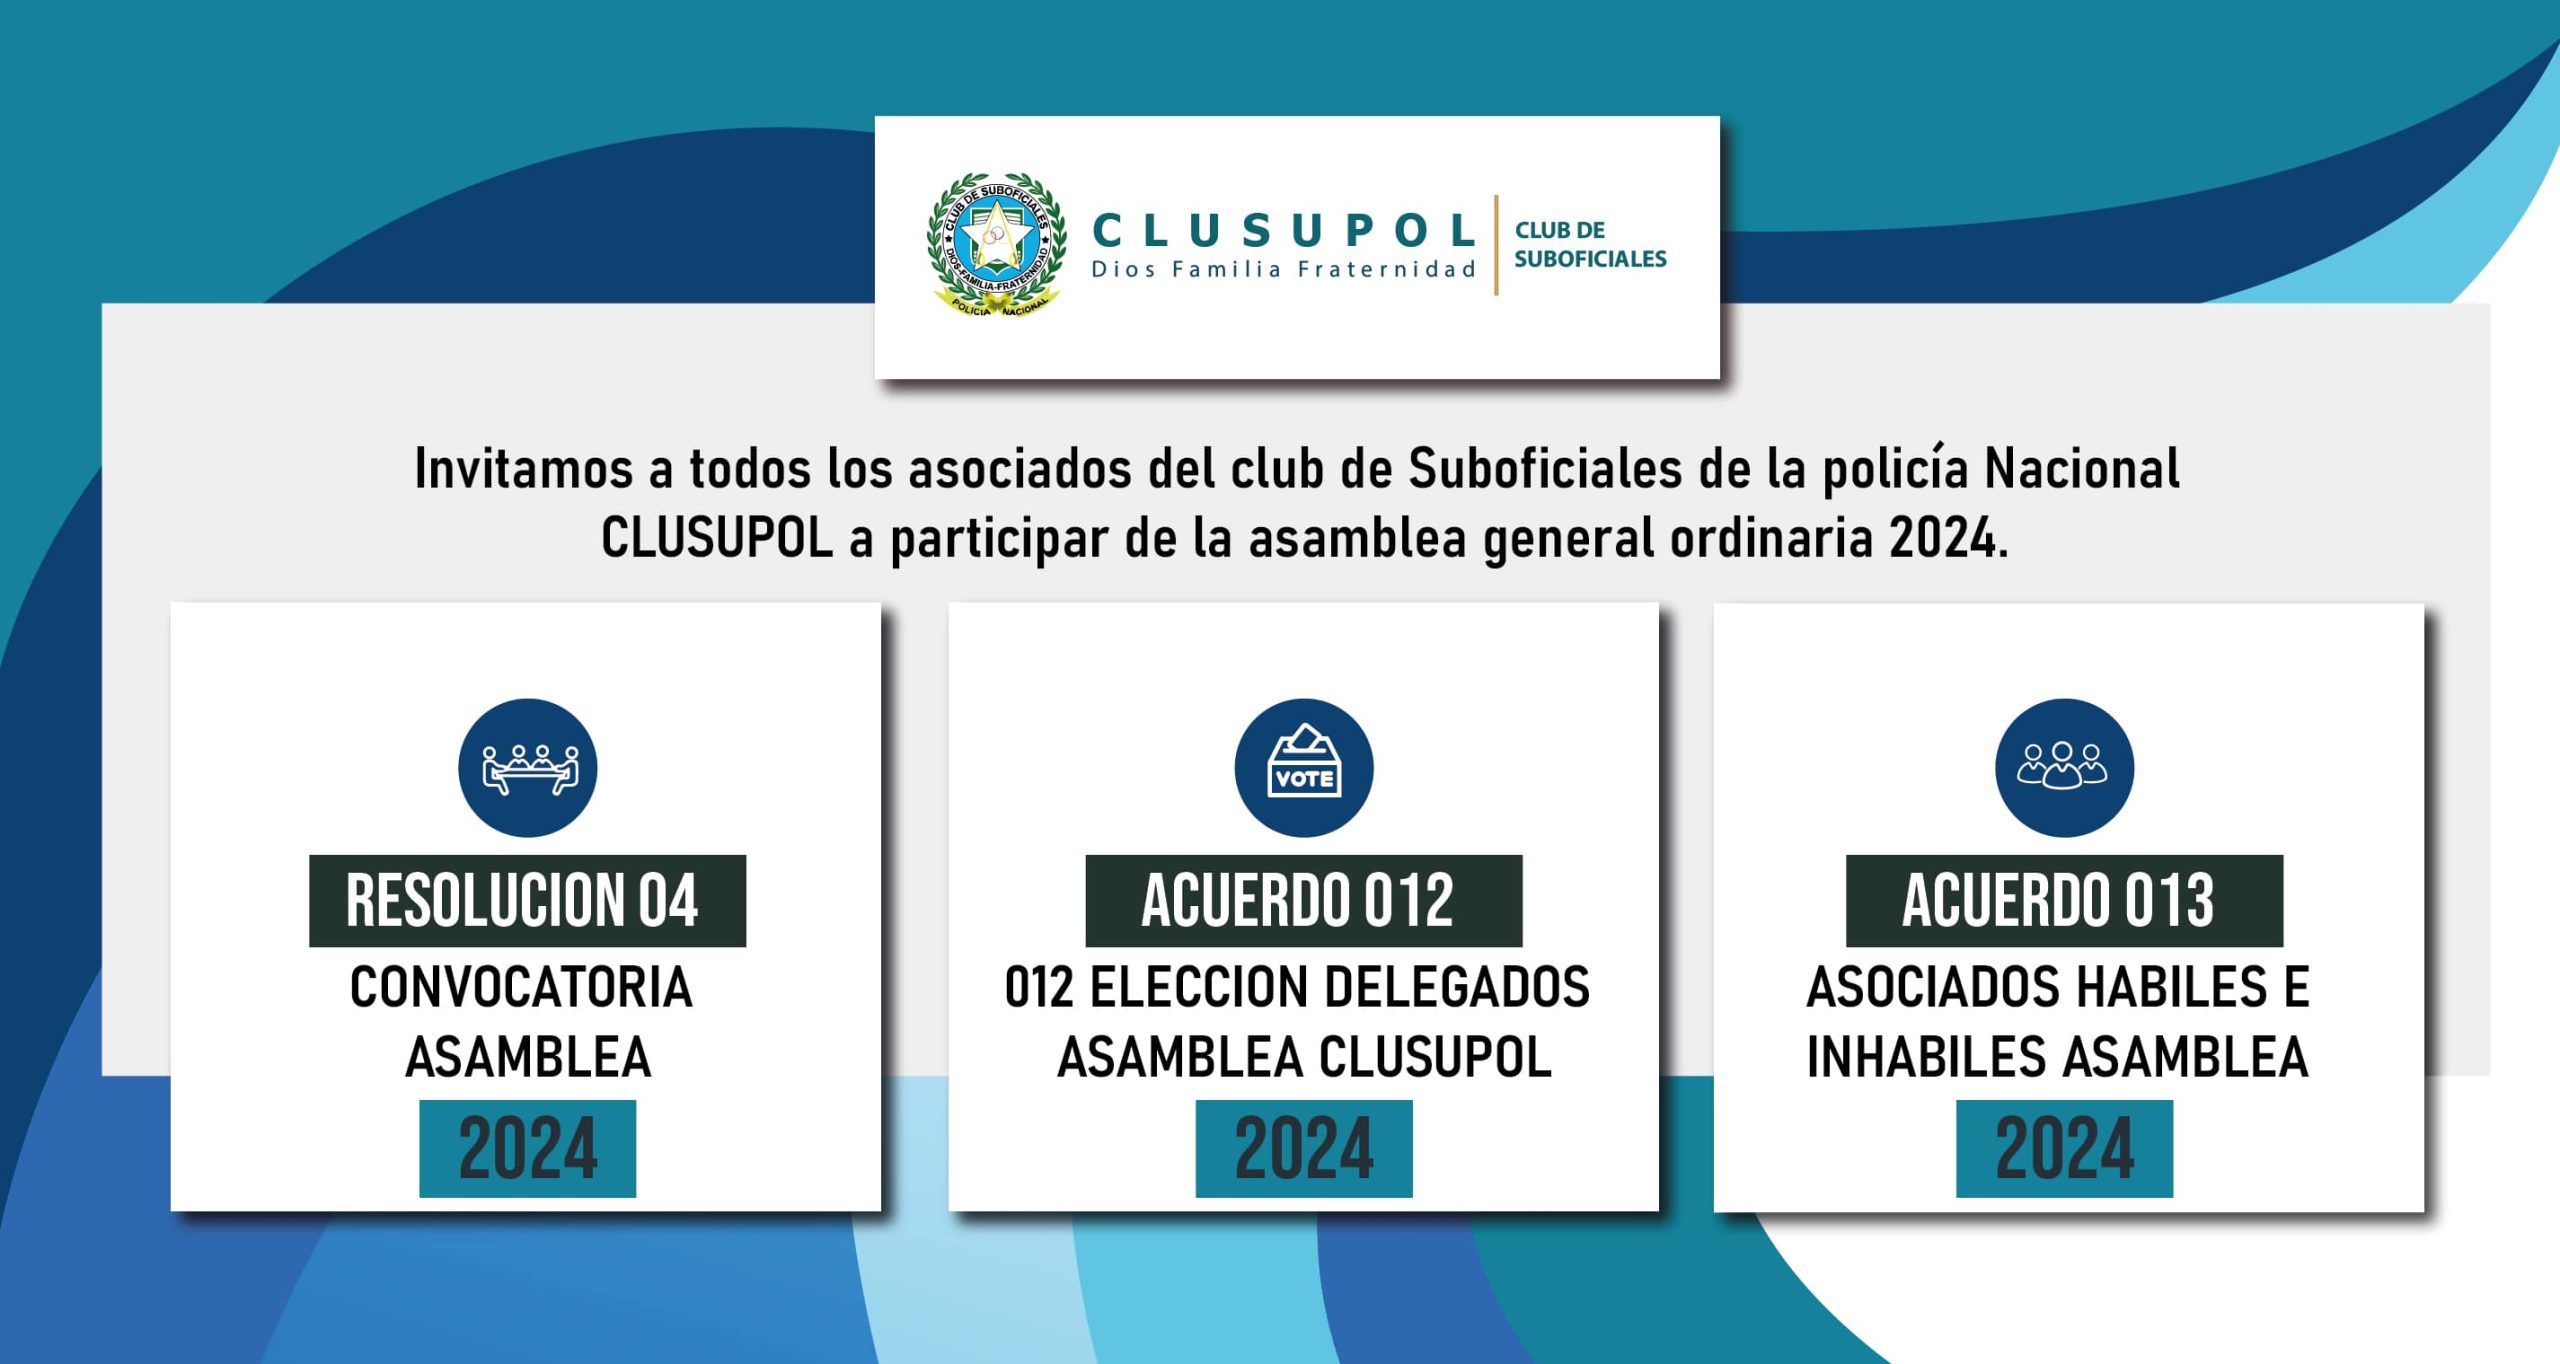 Asamblea Clusupol